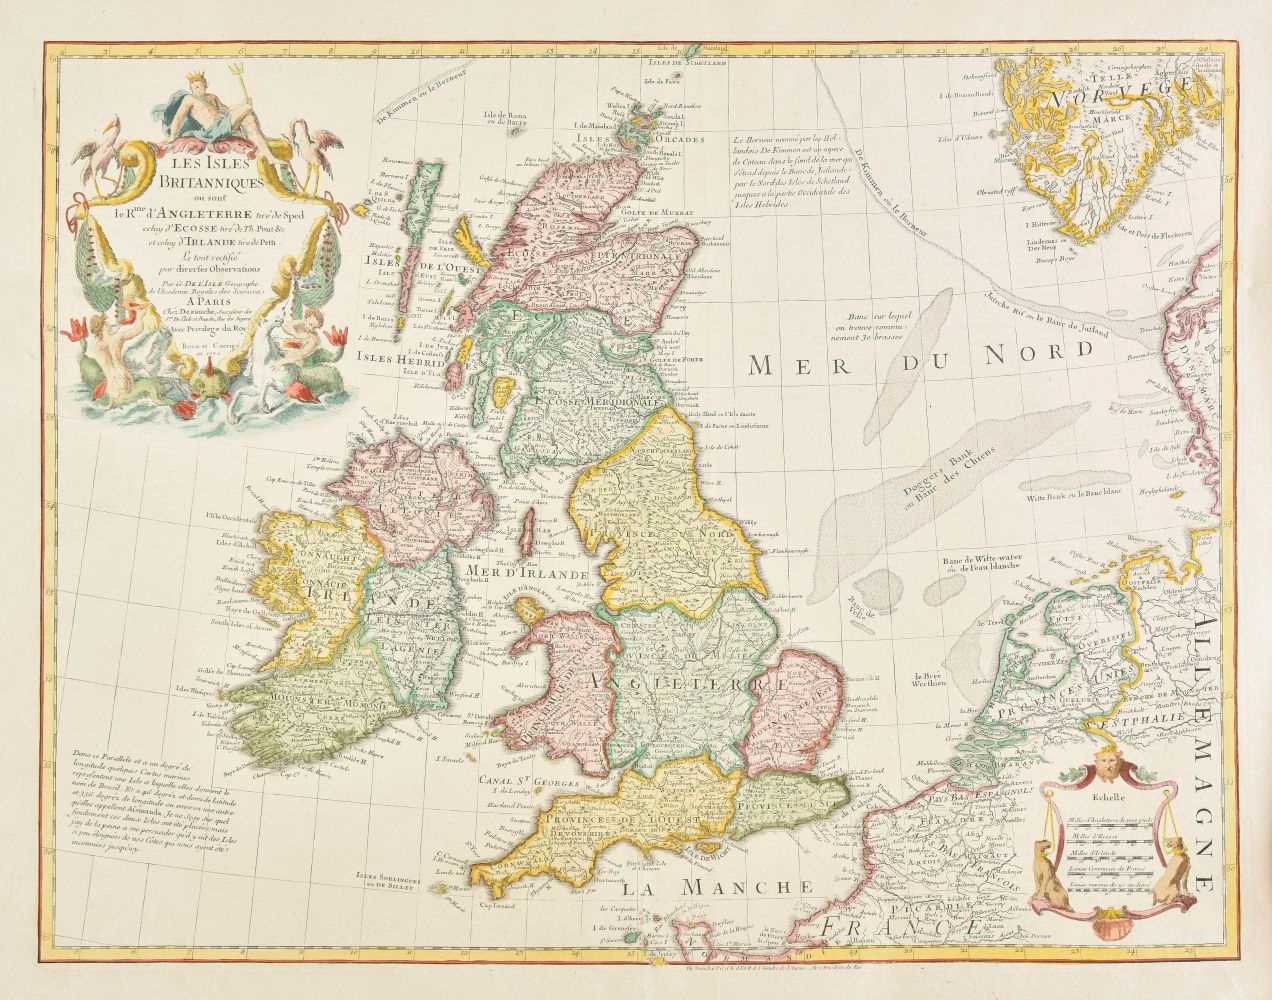 Lot 12 - British Isles. De L'Isle (Guillaume), Les Isles Britanniques, 1772